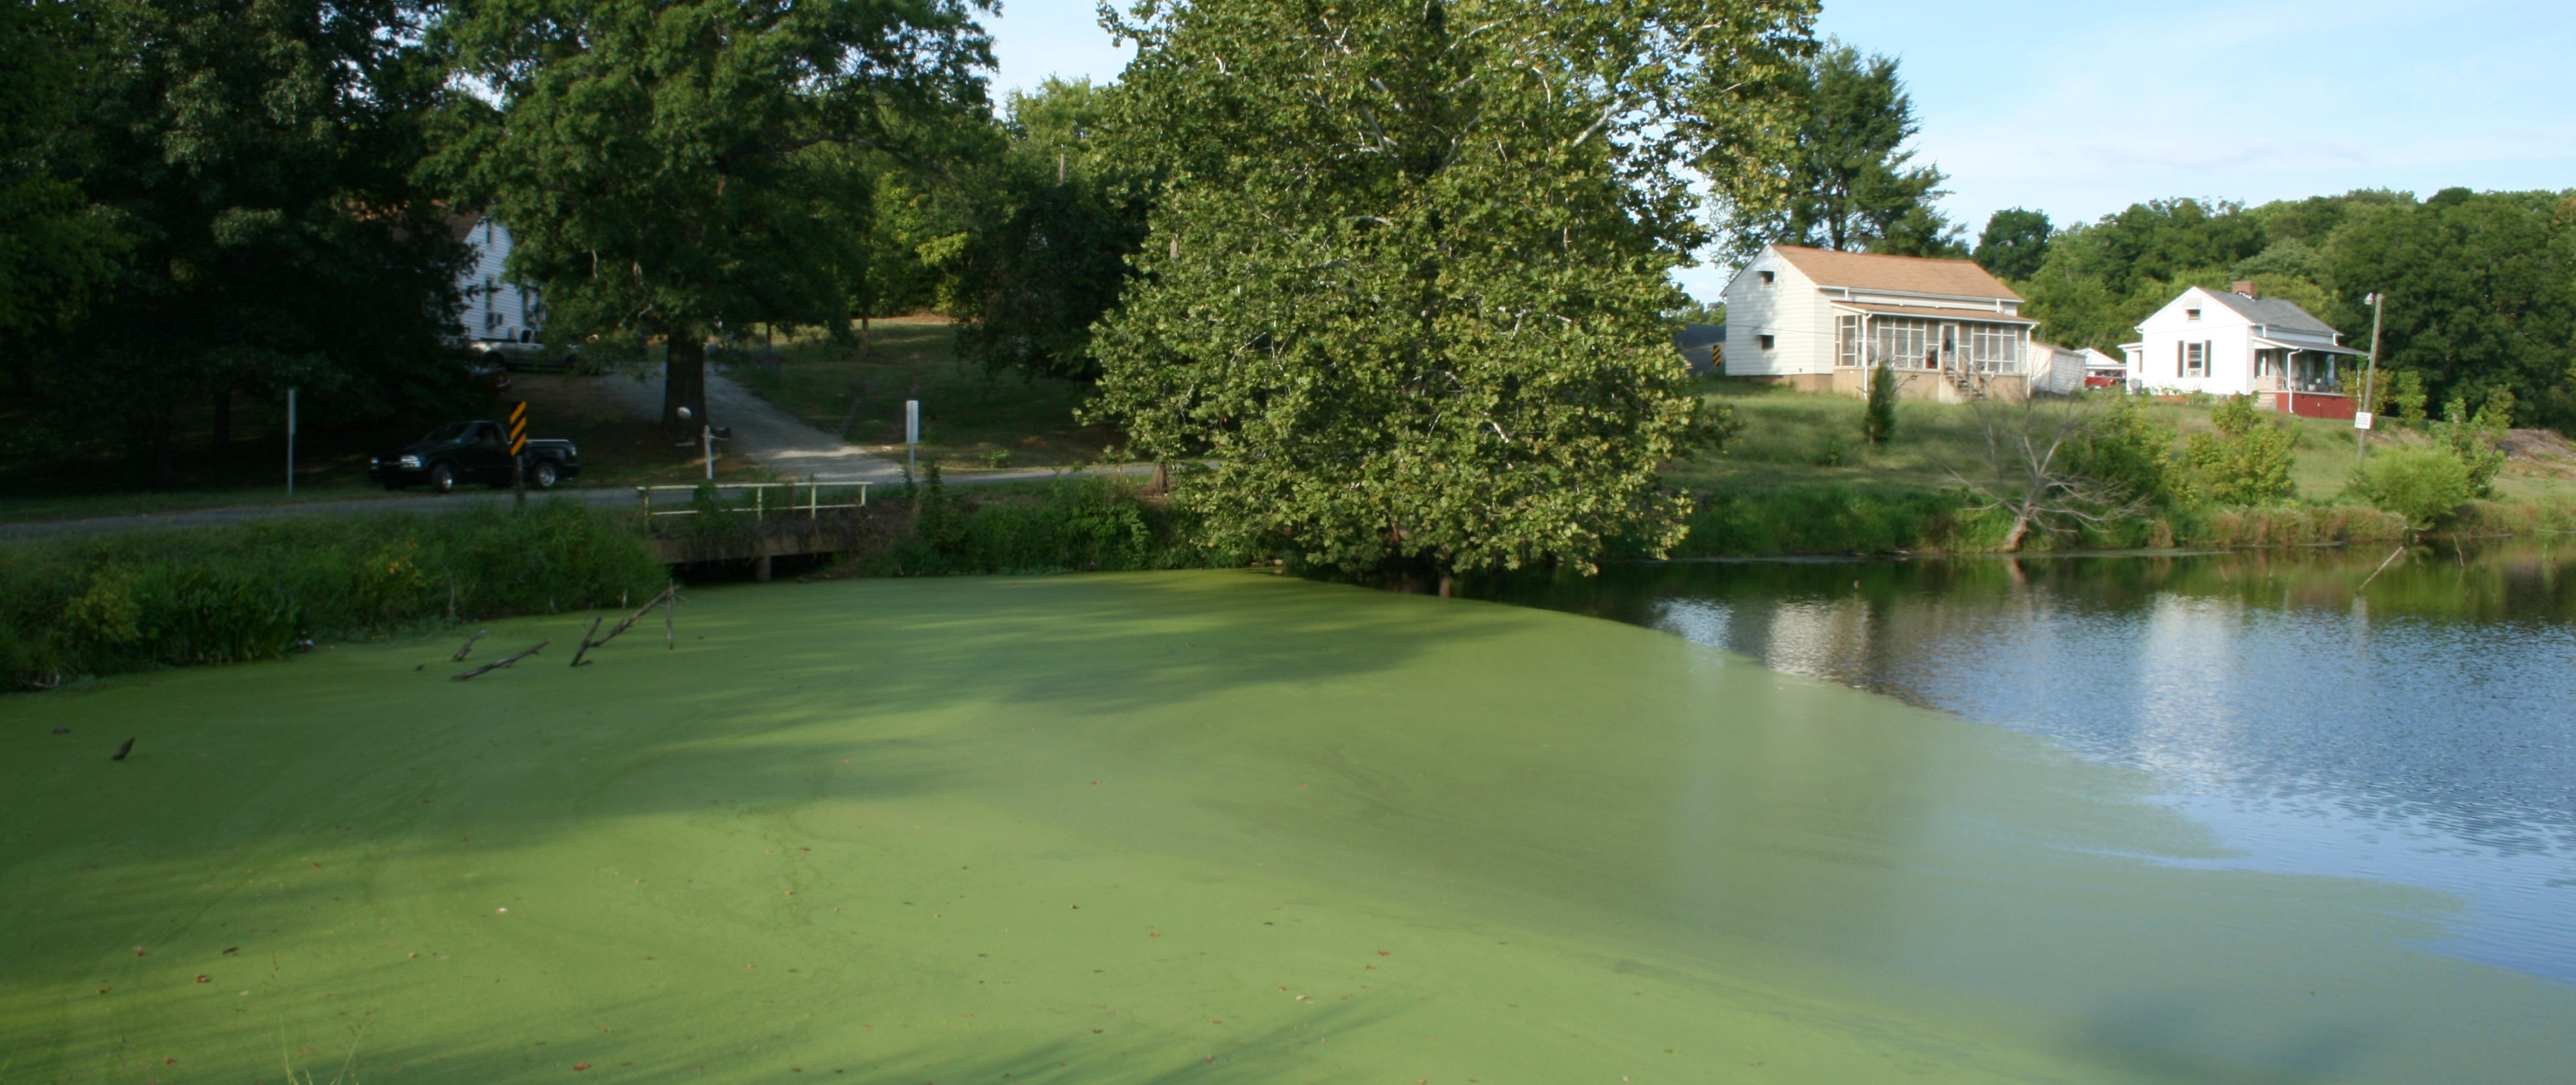 Algae lagoon in Swepsonville pond image